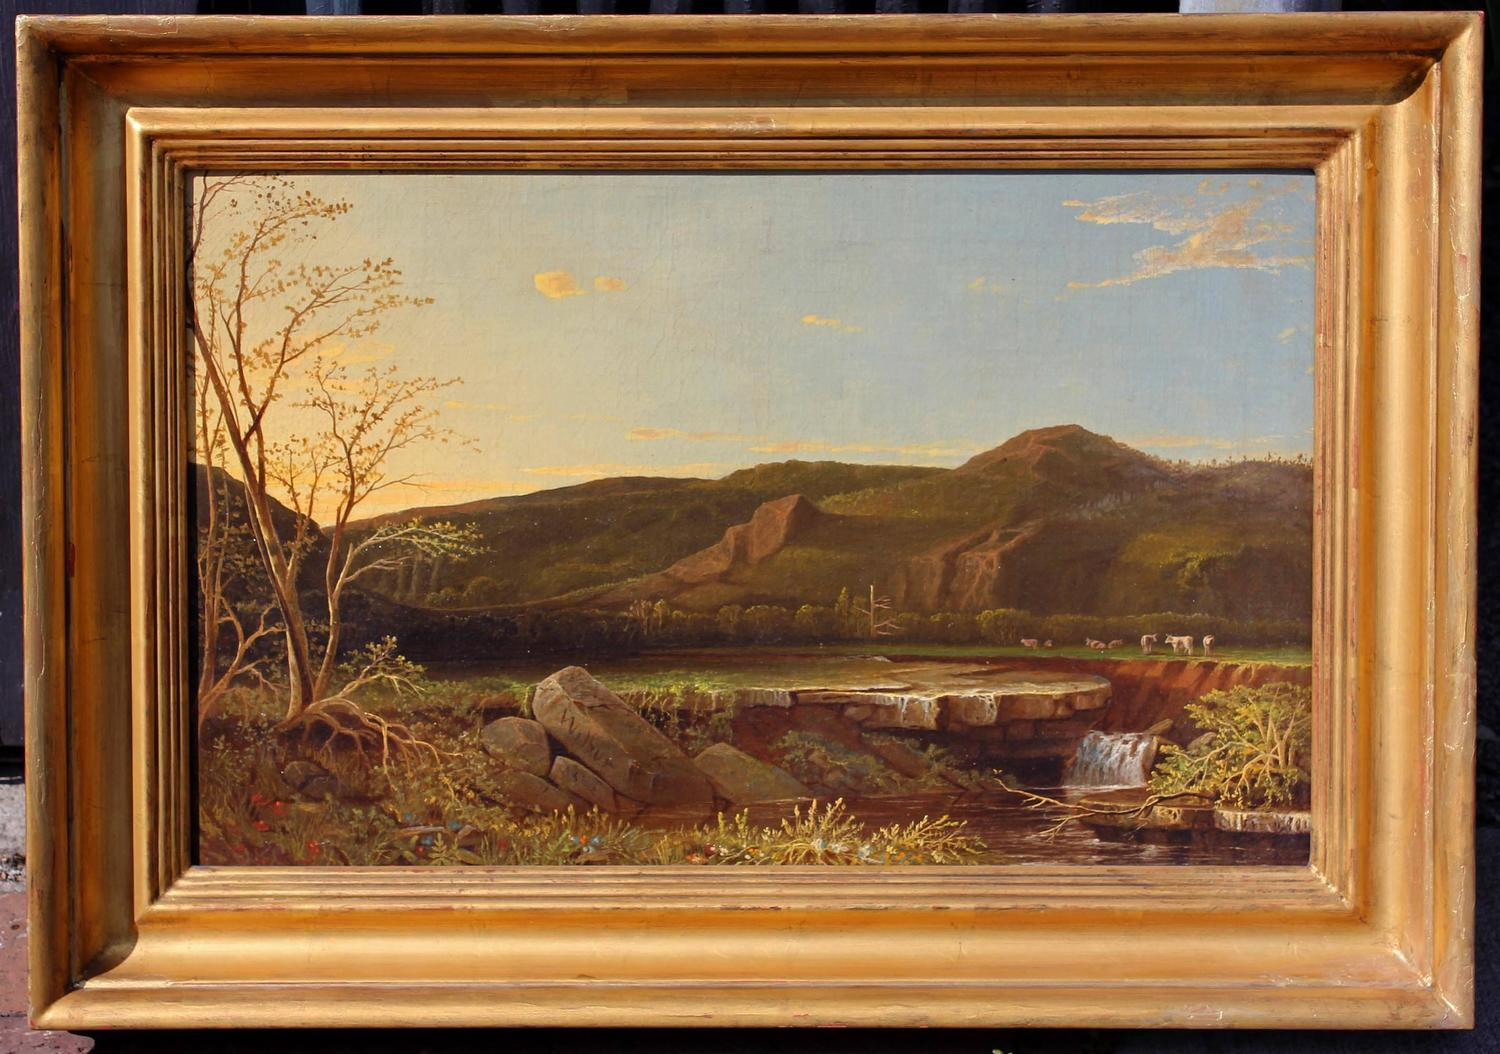 Landscape Paintings For Sale
 Antique Landscape Oil Painting For Sale at 1stdibs